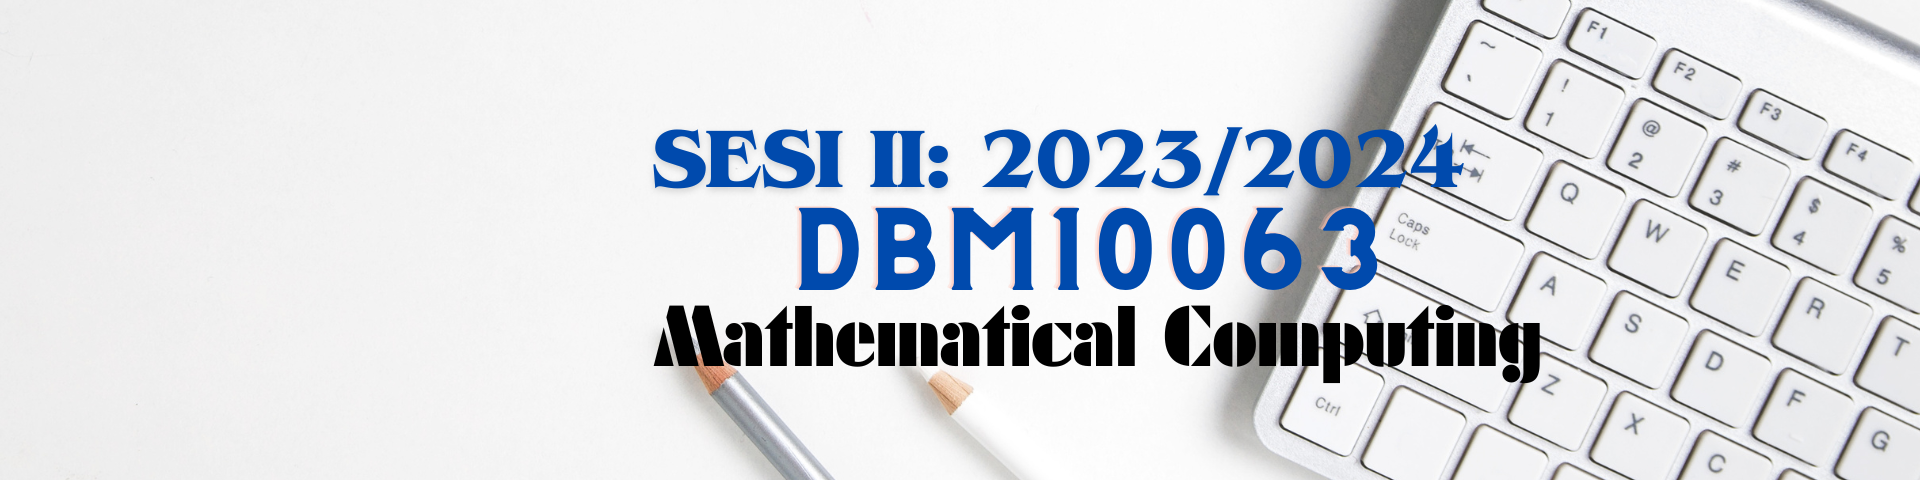 DBM10063 MATHEMATICAL COMPUTING